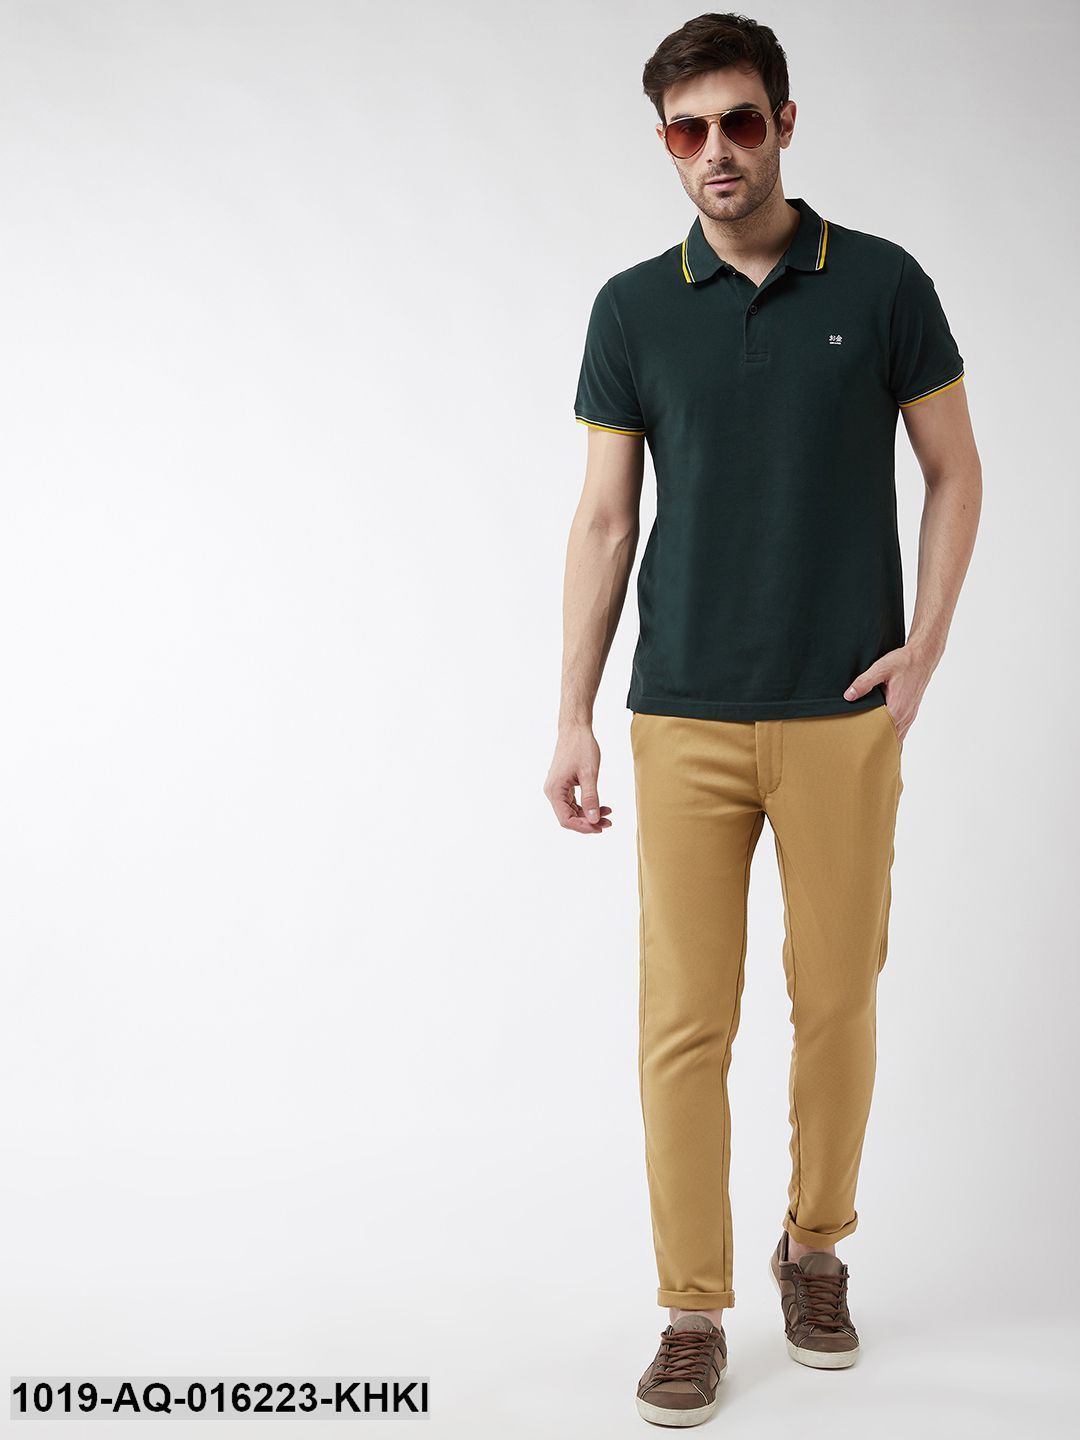 Men's Cotton Blend Khaki Woven Design Casual Trousers - Sojanya